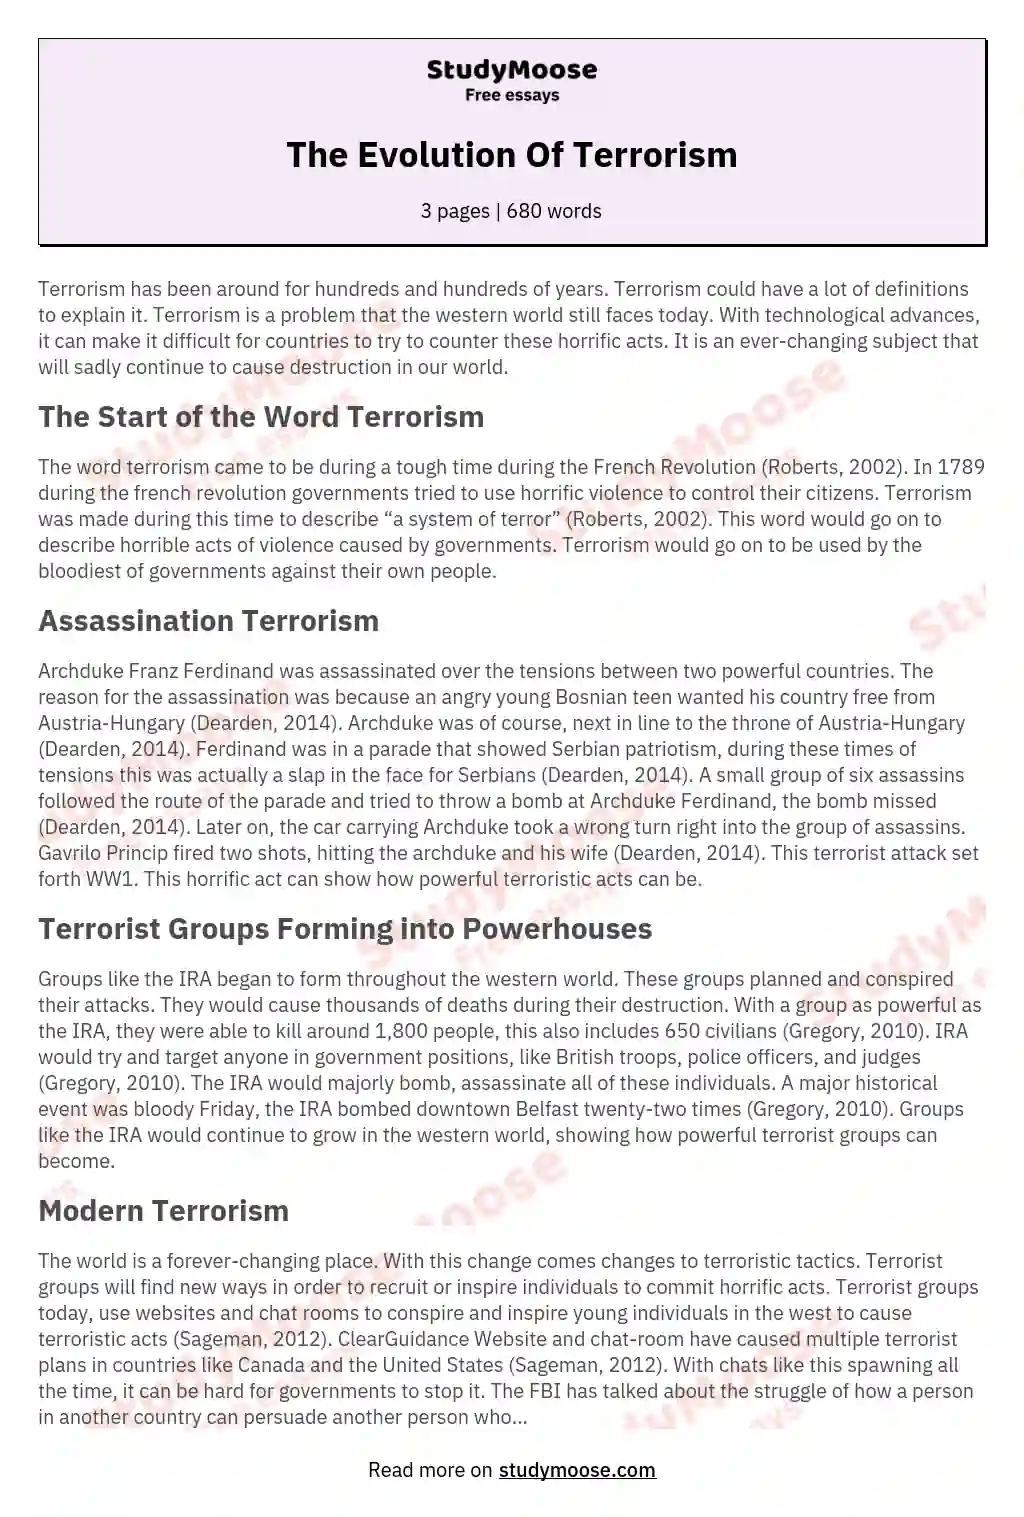 terrorism essay points